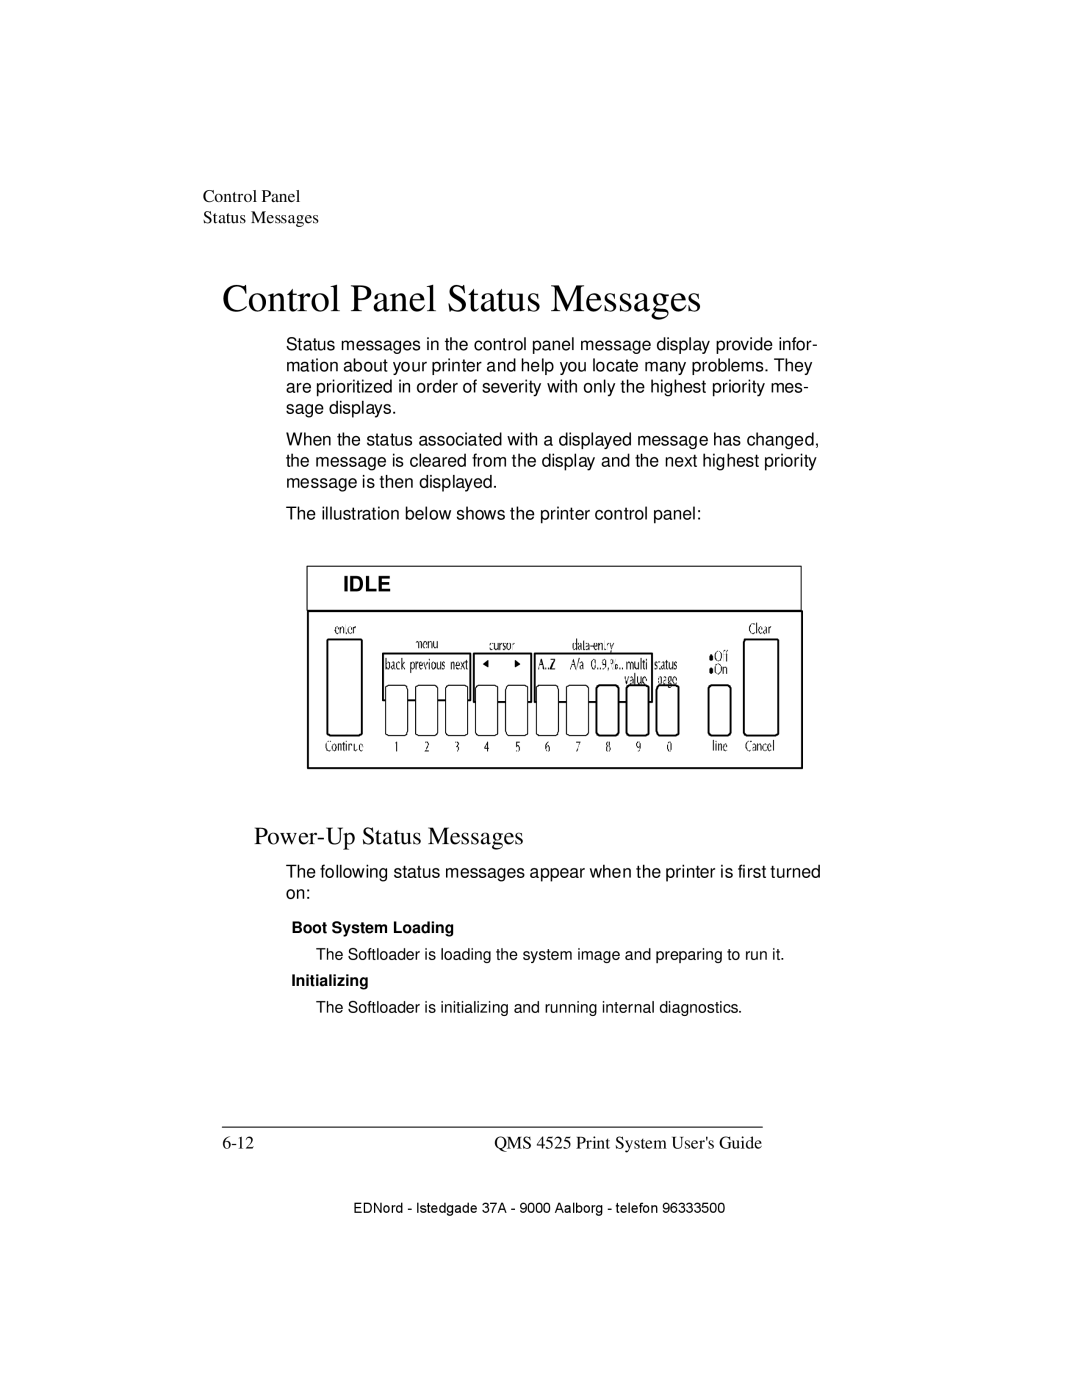 IBM QMS 4525 manual Control Panel Status Messages, Power-Up Status Messages 